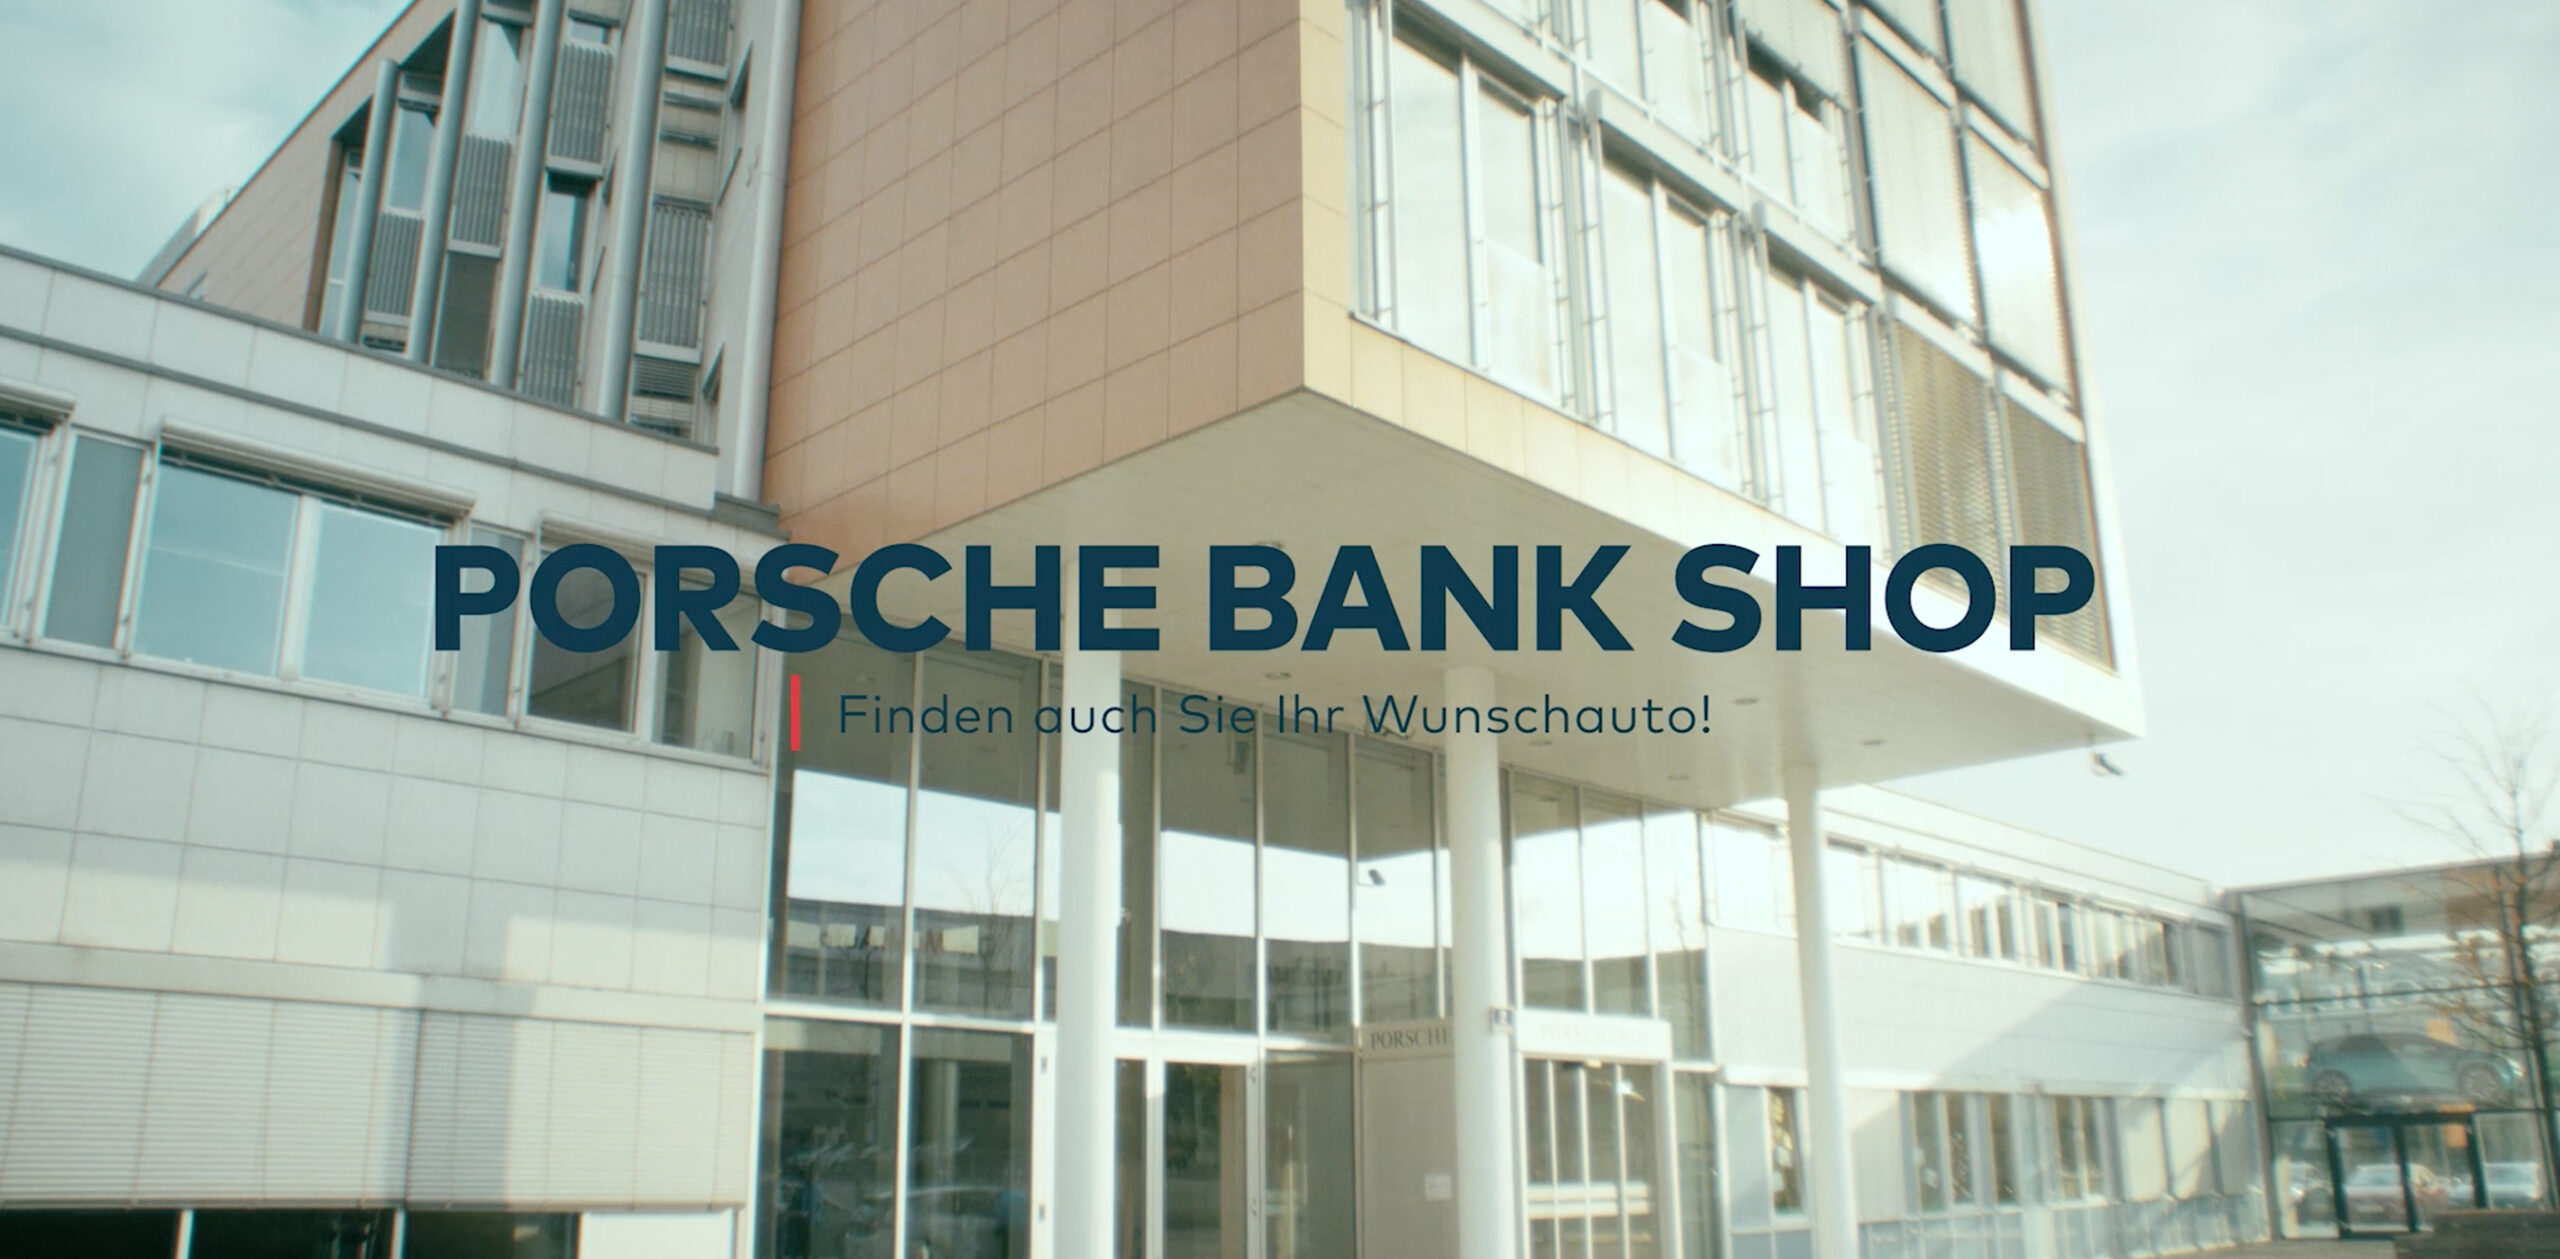 Porsche Bank Shop Film Intro